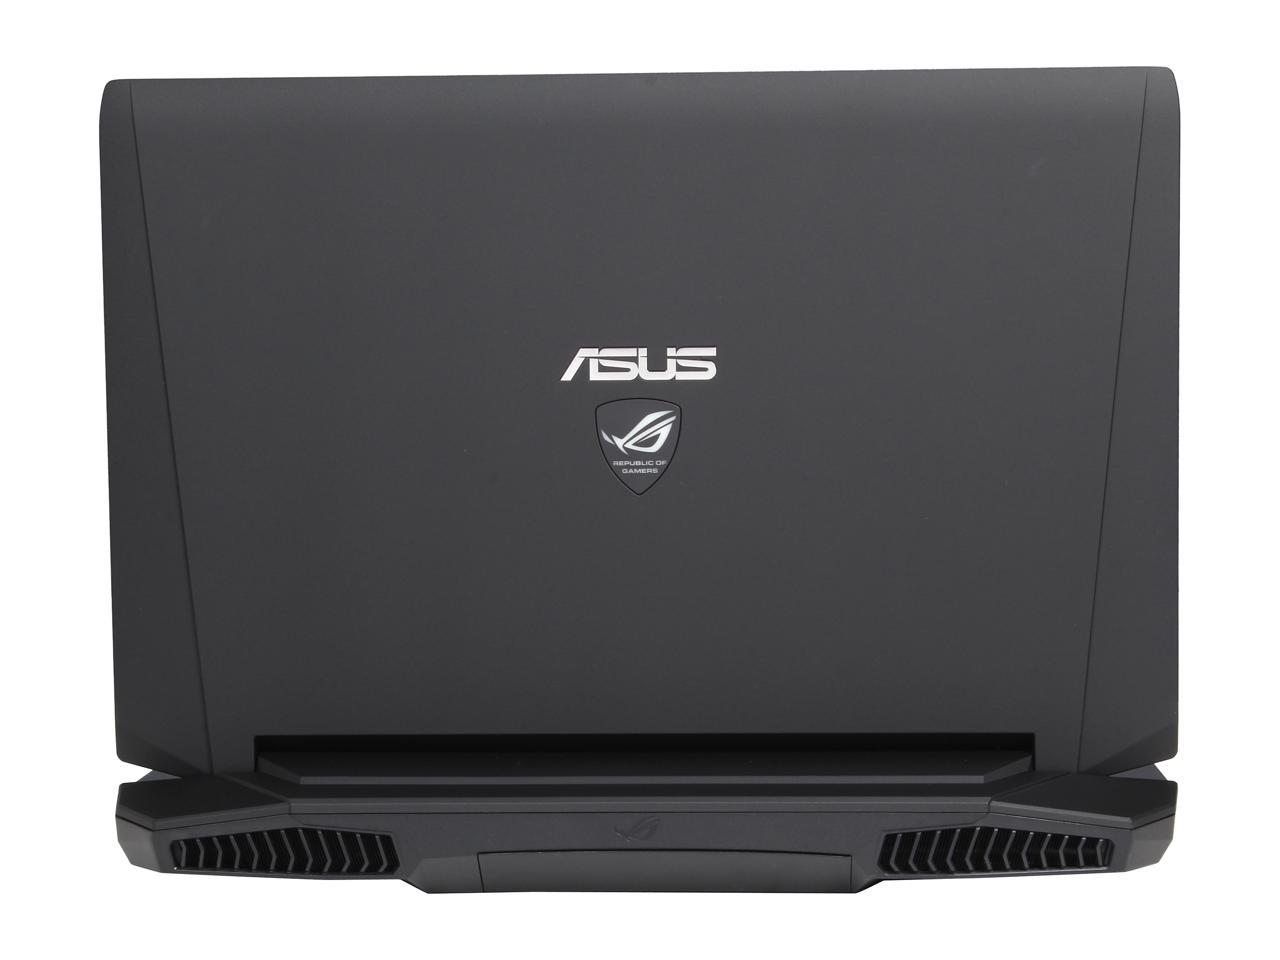 Refurbished: ASUS G750JM-BSI7N23 Gaming Laptop Intel Core i7-4700HQ 2.4 ...